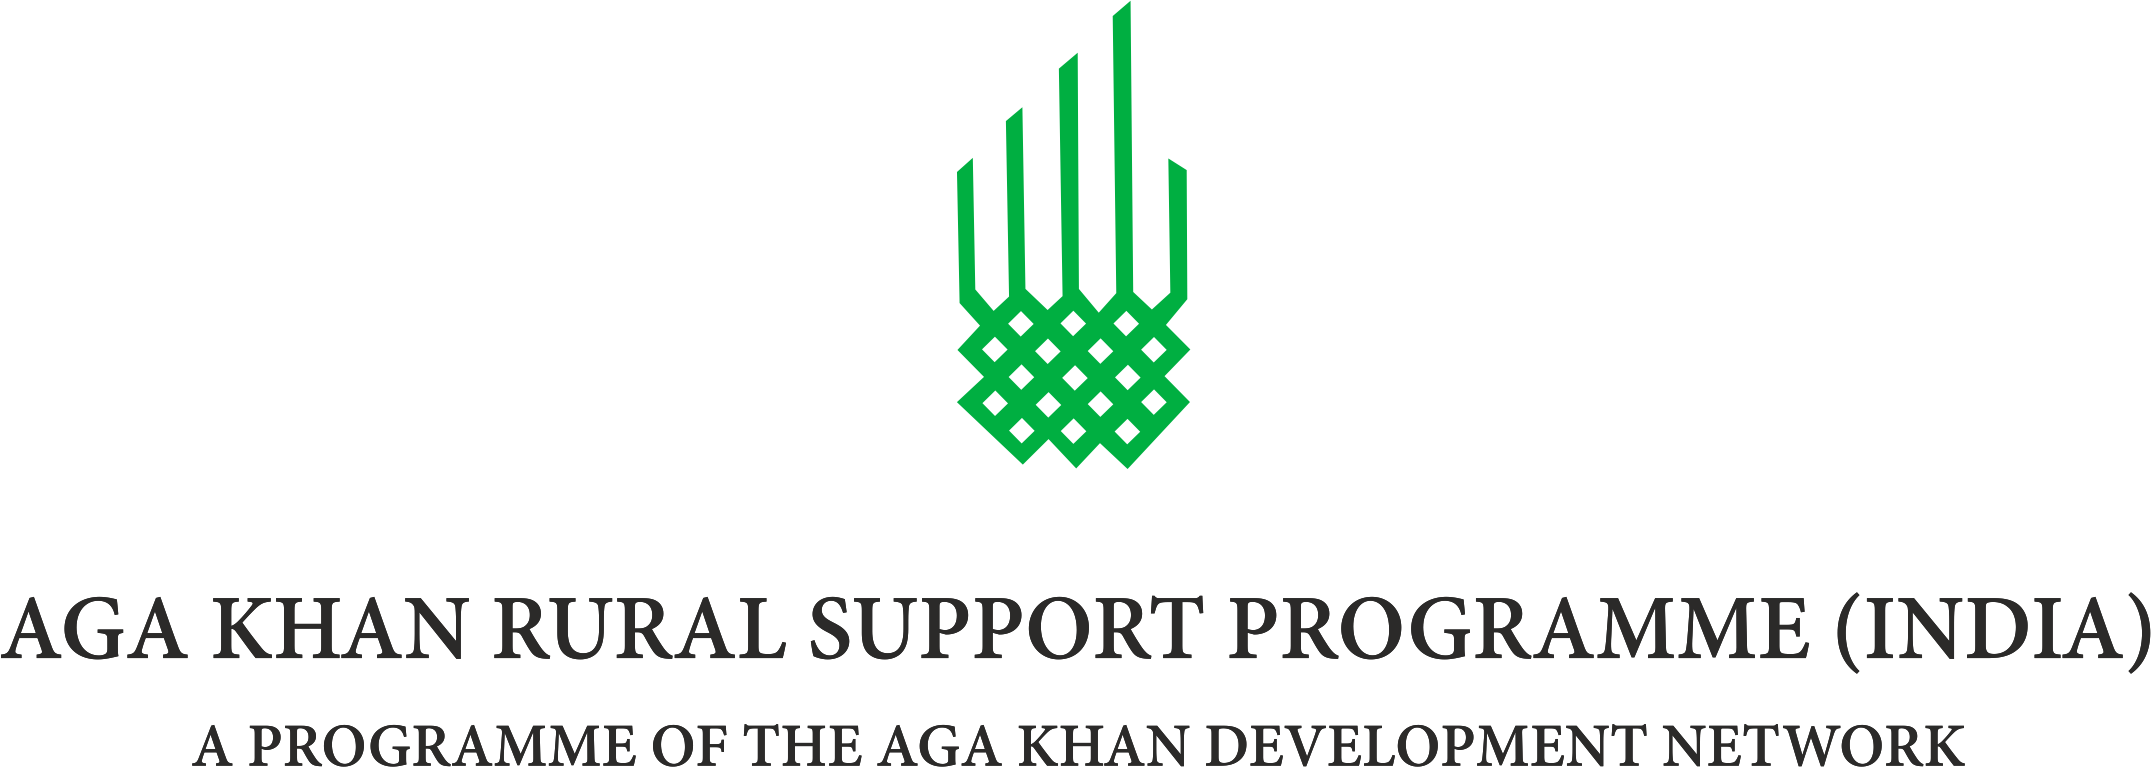 Aga Khan Rural Support Programme (India)